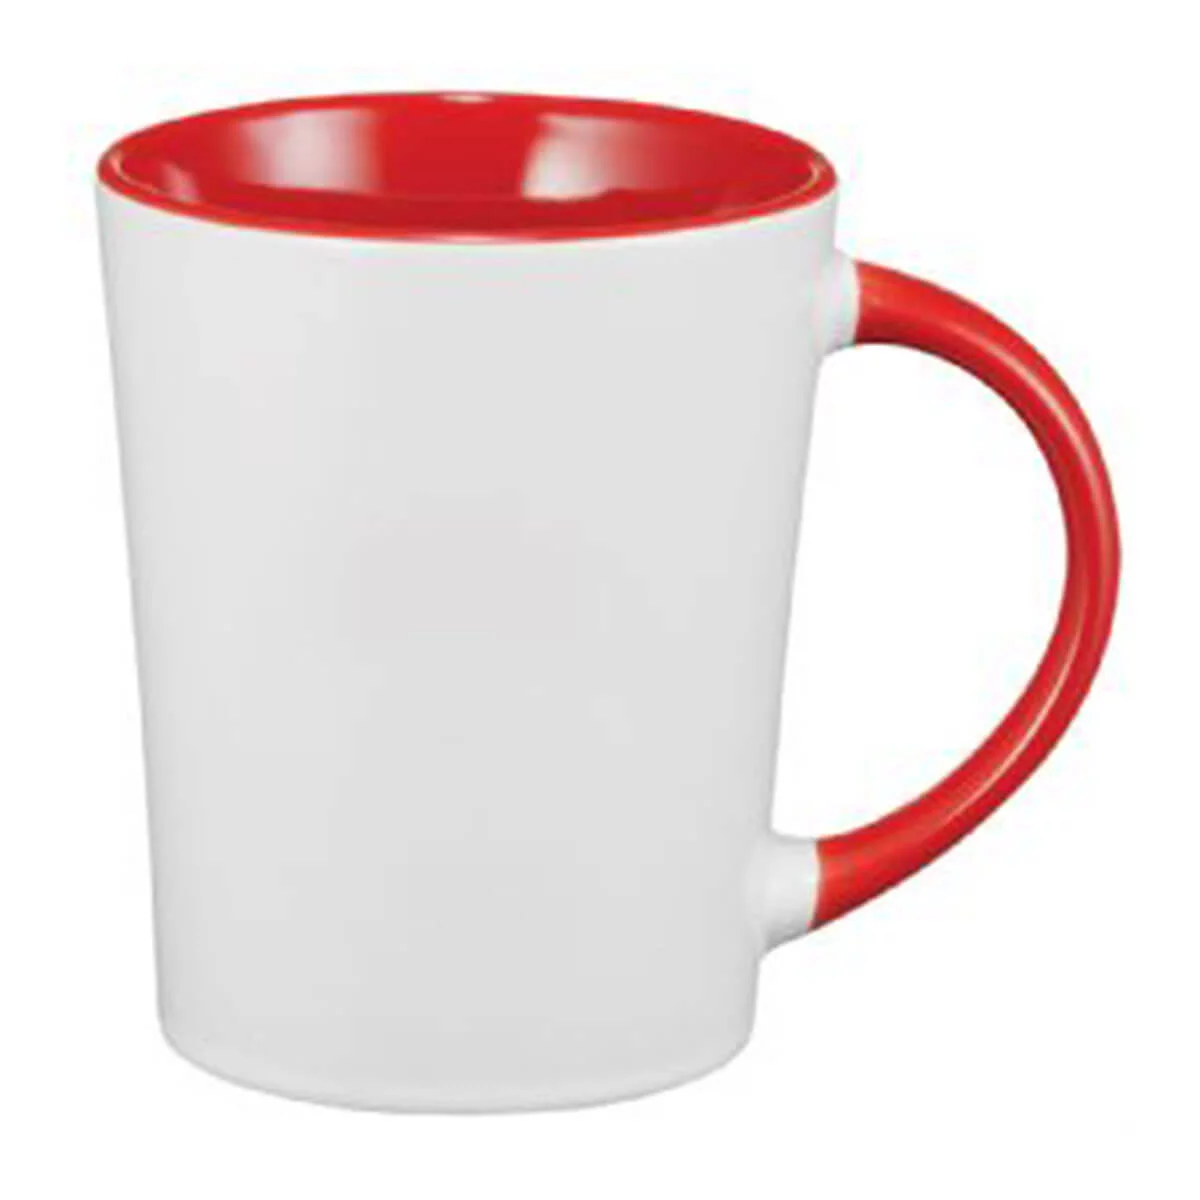 Aura Ceramic Mug - Red with white